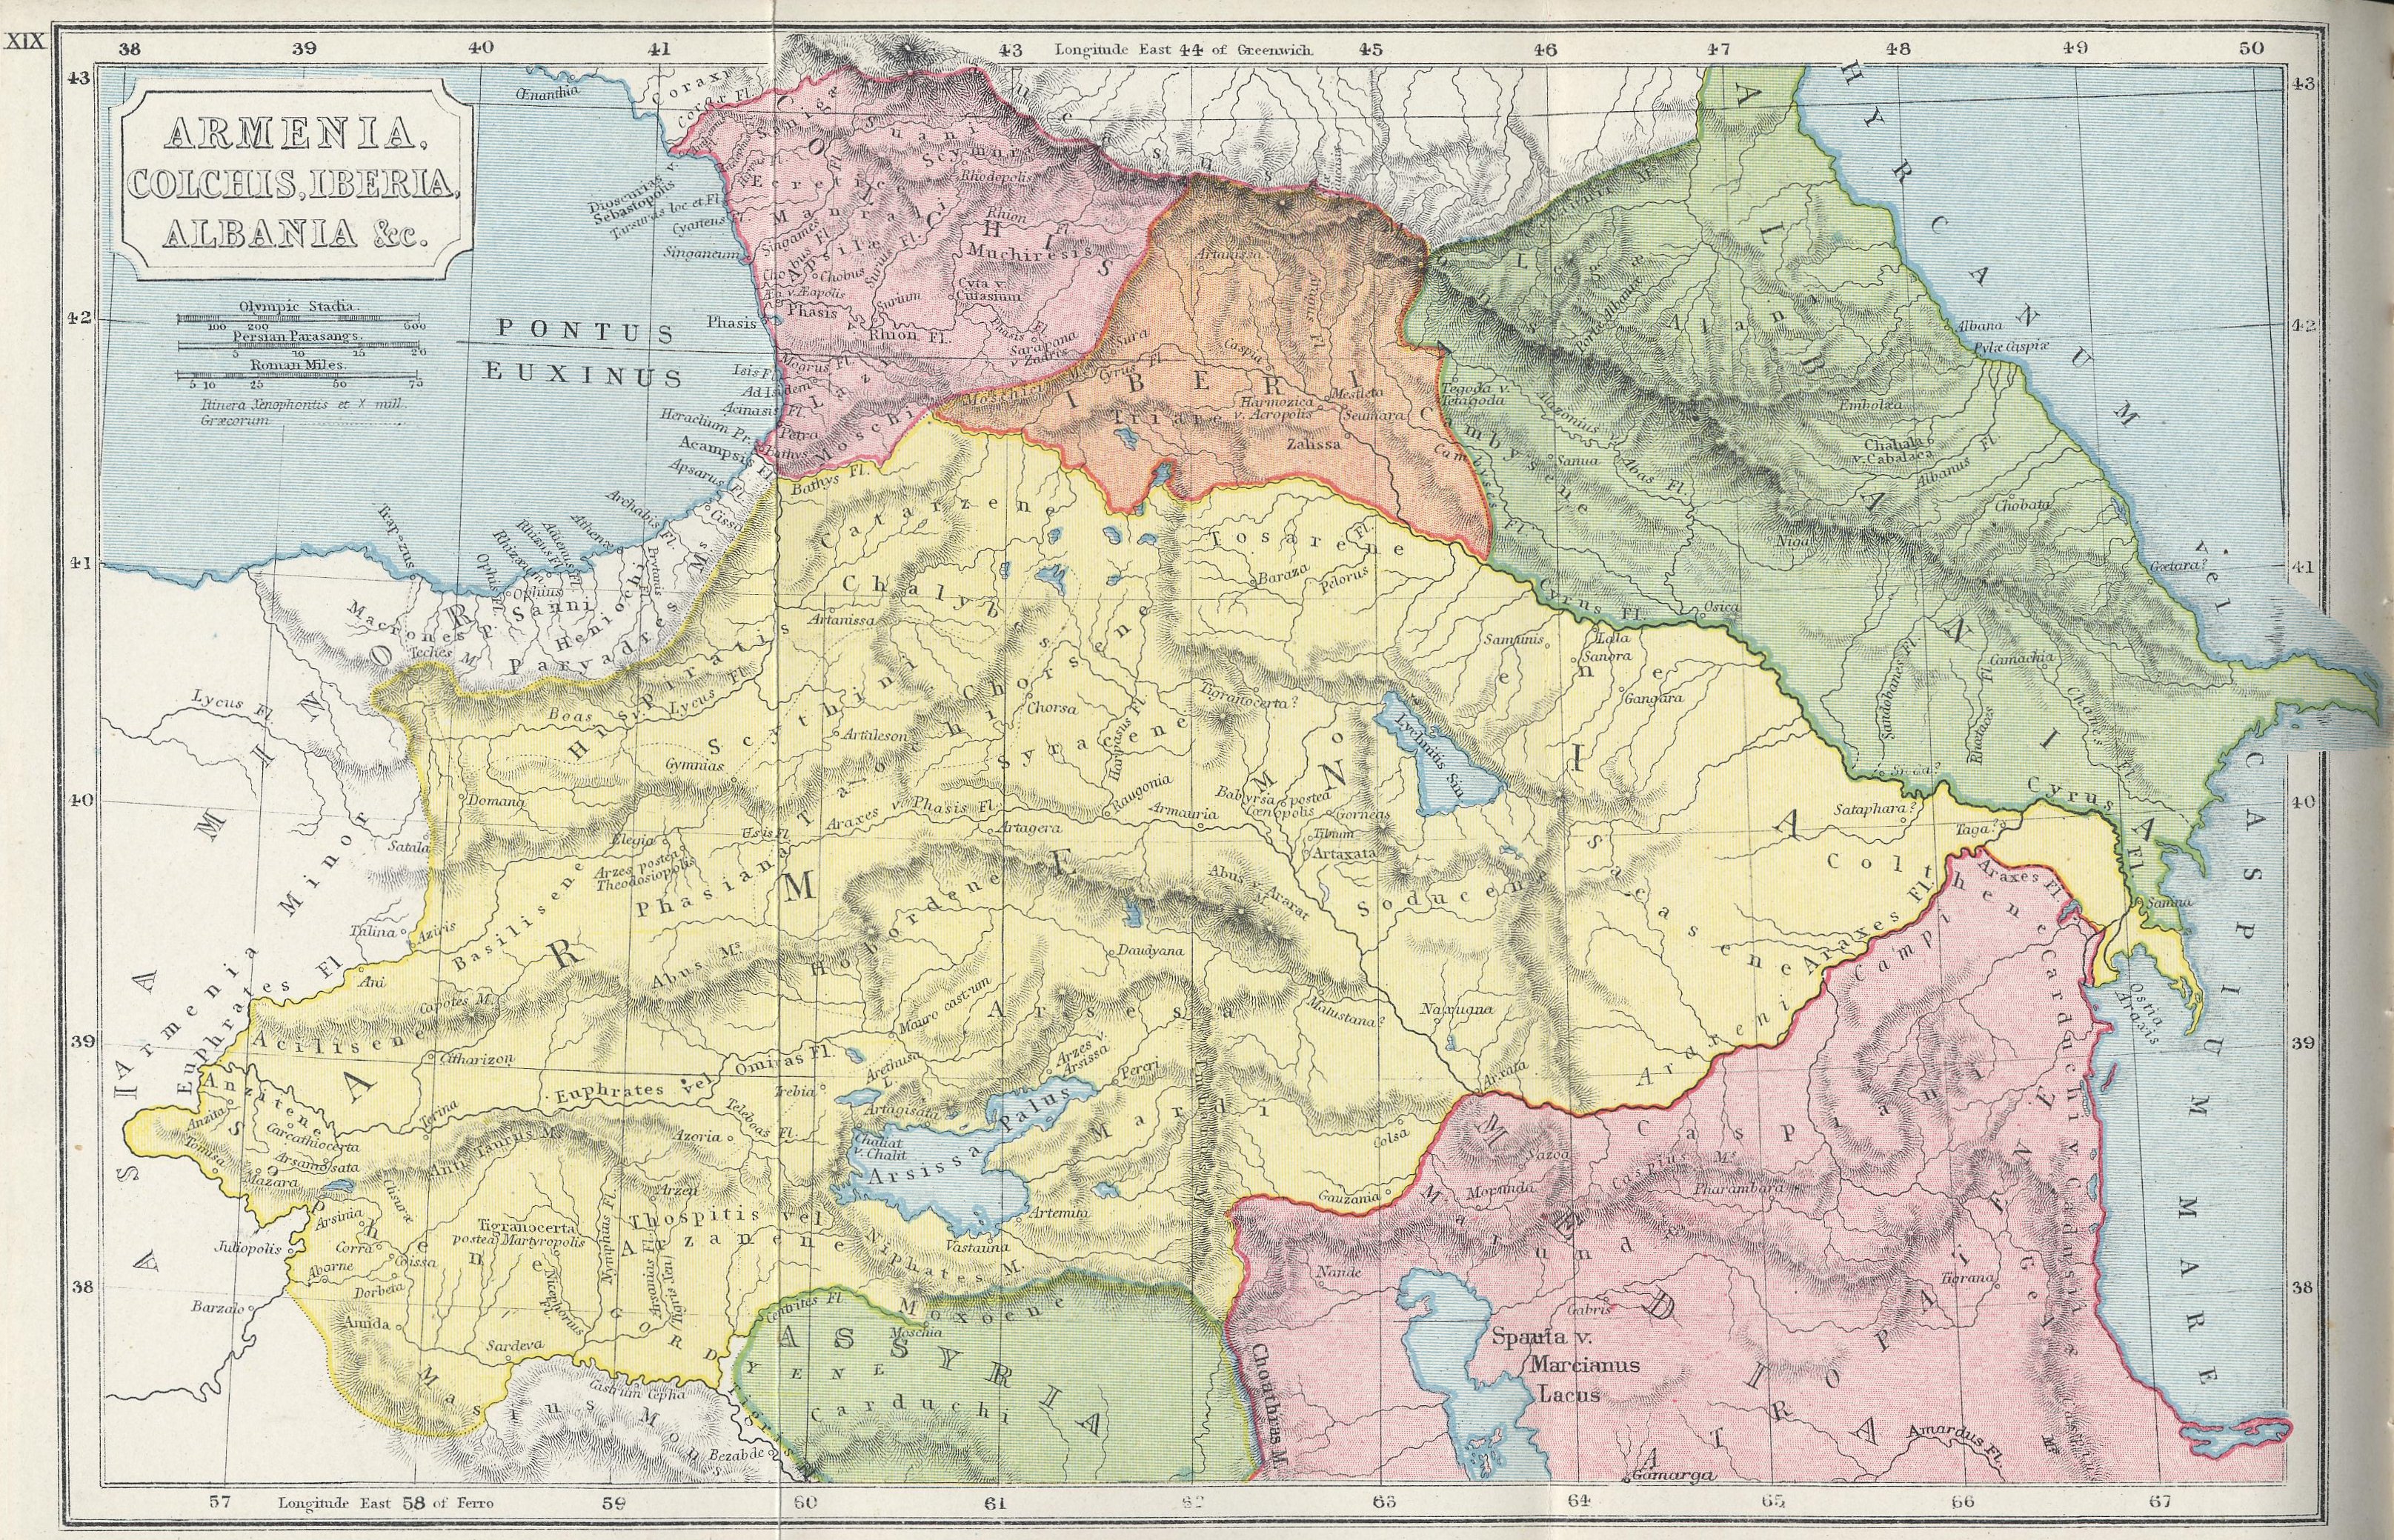 Map of Armenia70 BC - AD 180